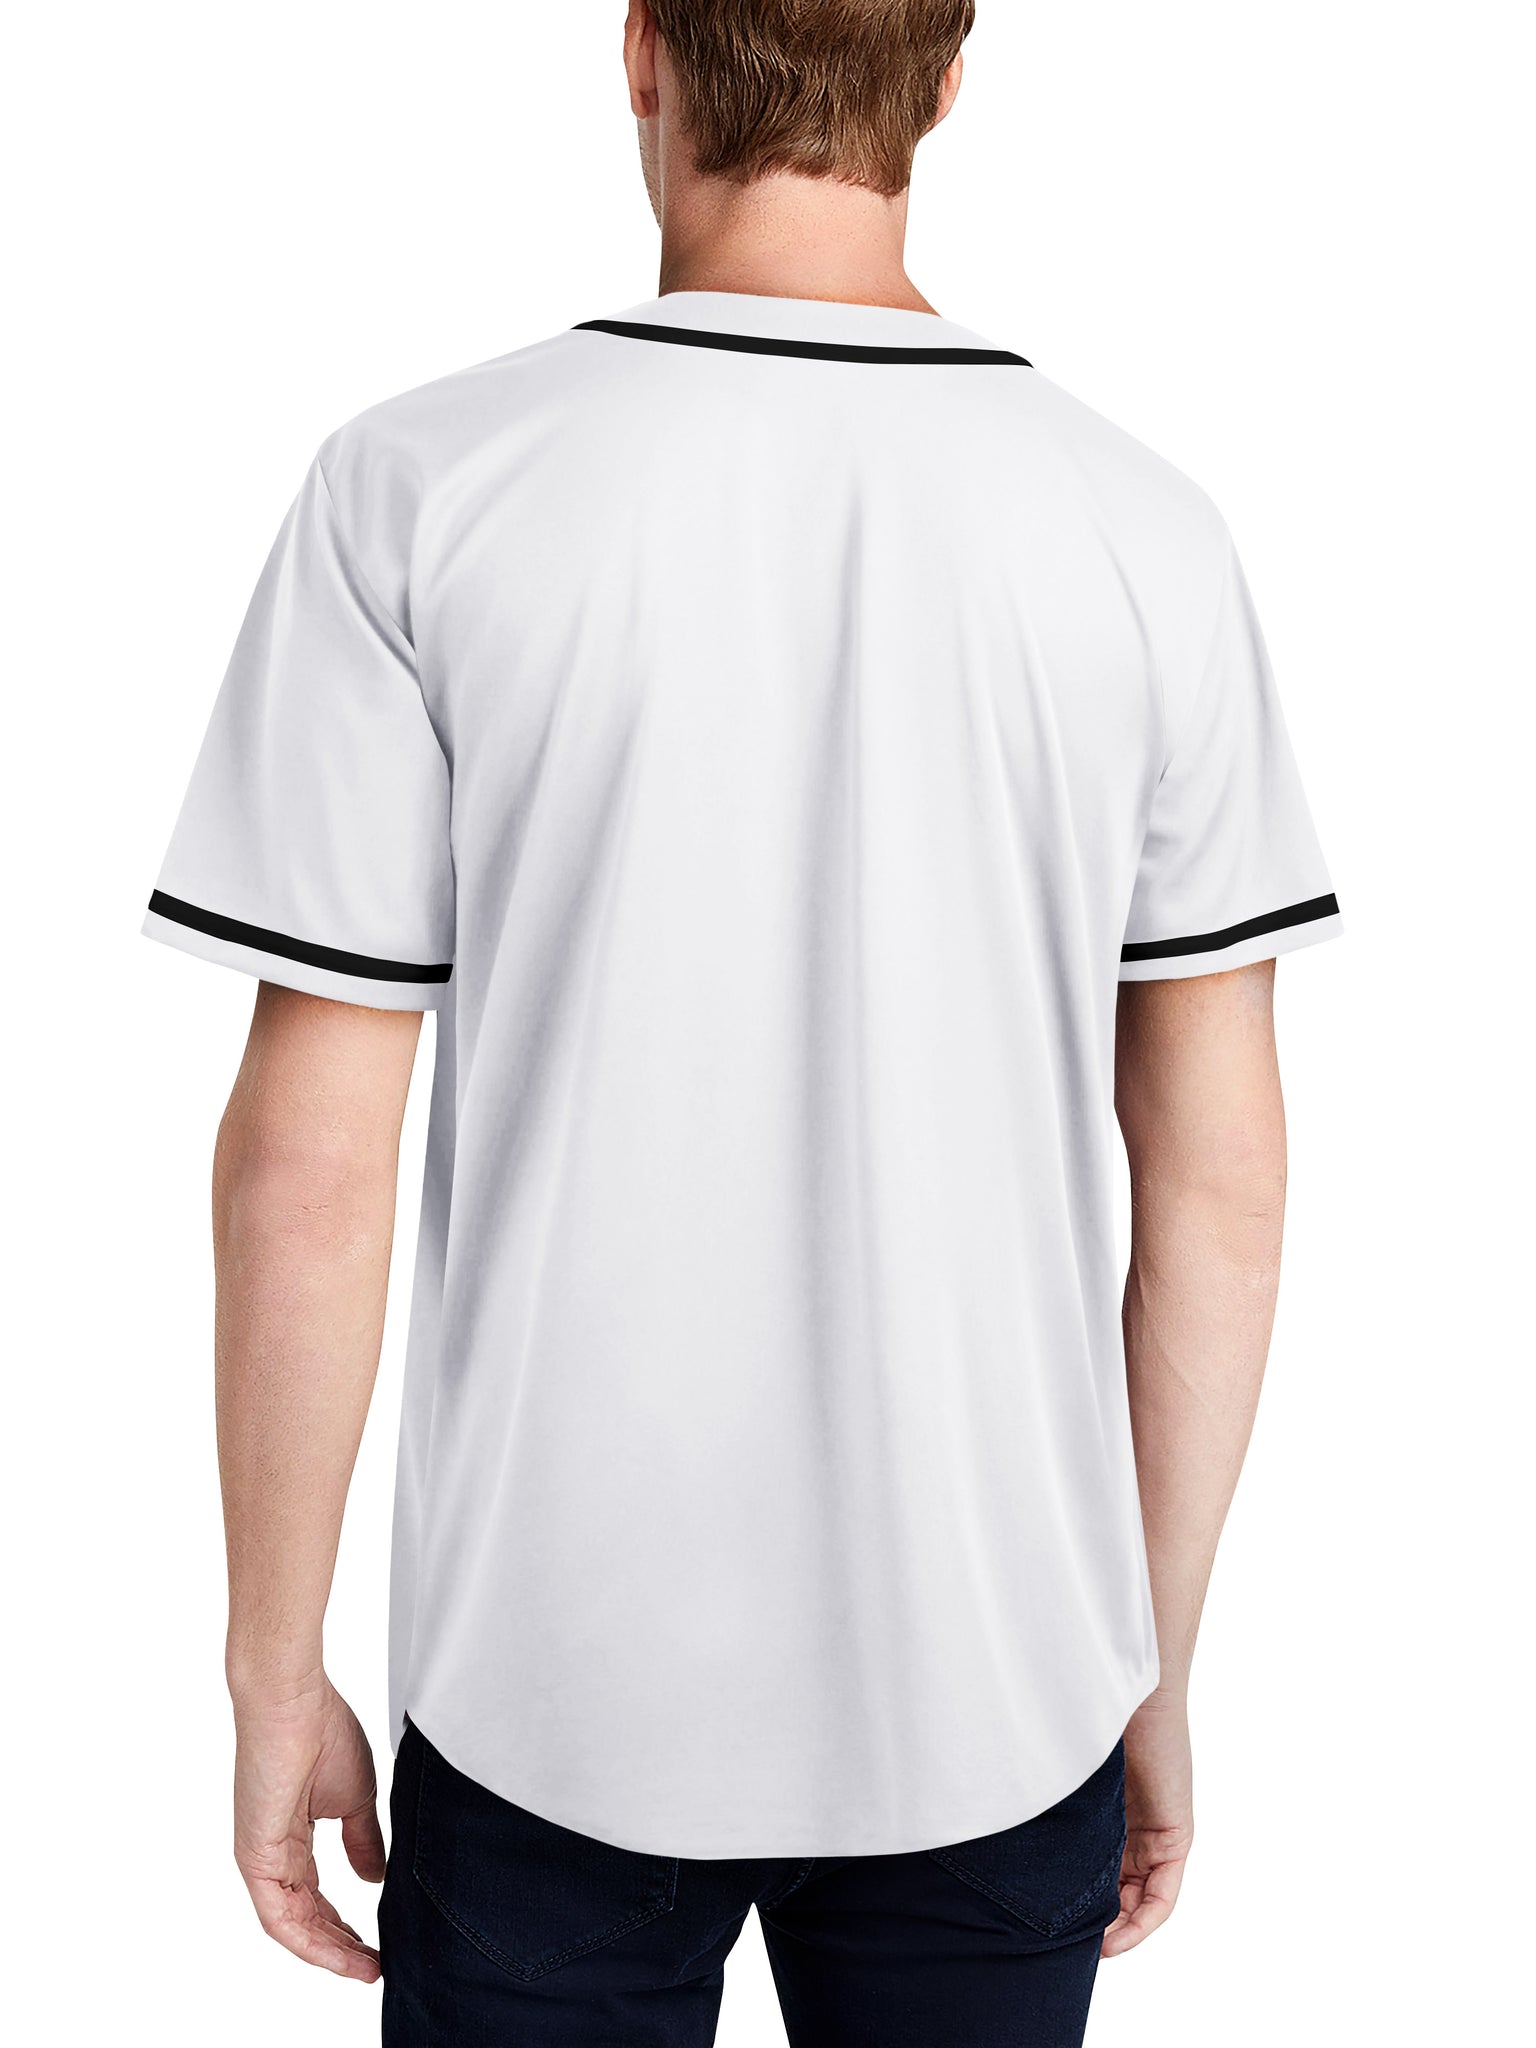 Blank Black Baseball Jersey Team Mens T-Shirt Uniform Sports Rave Outfit